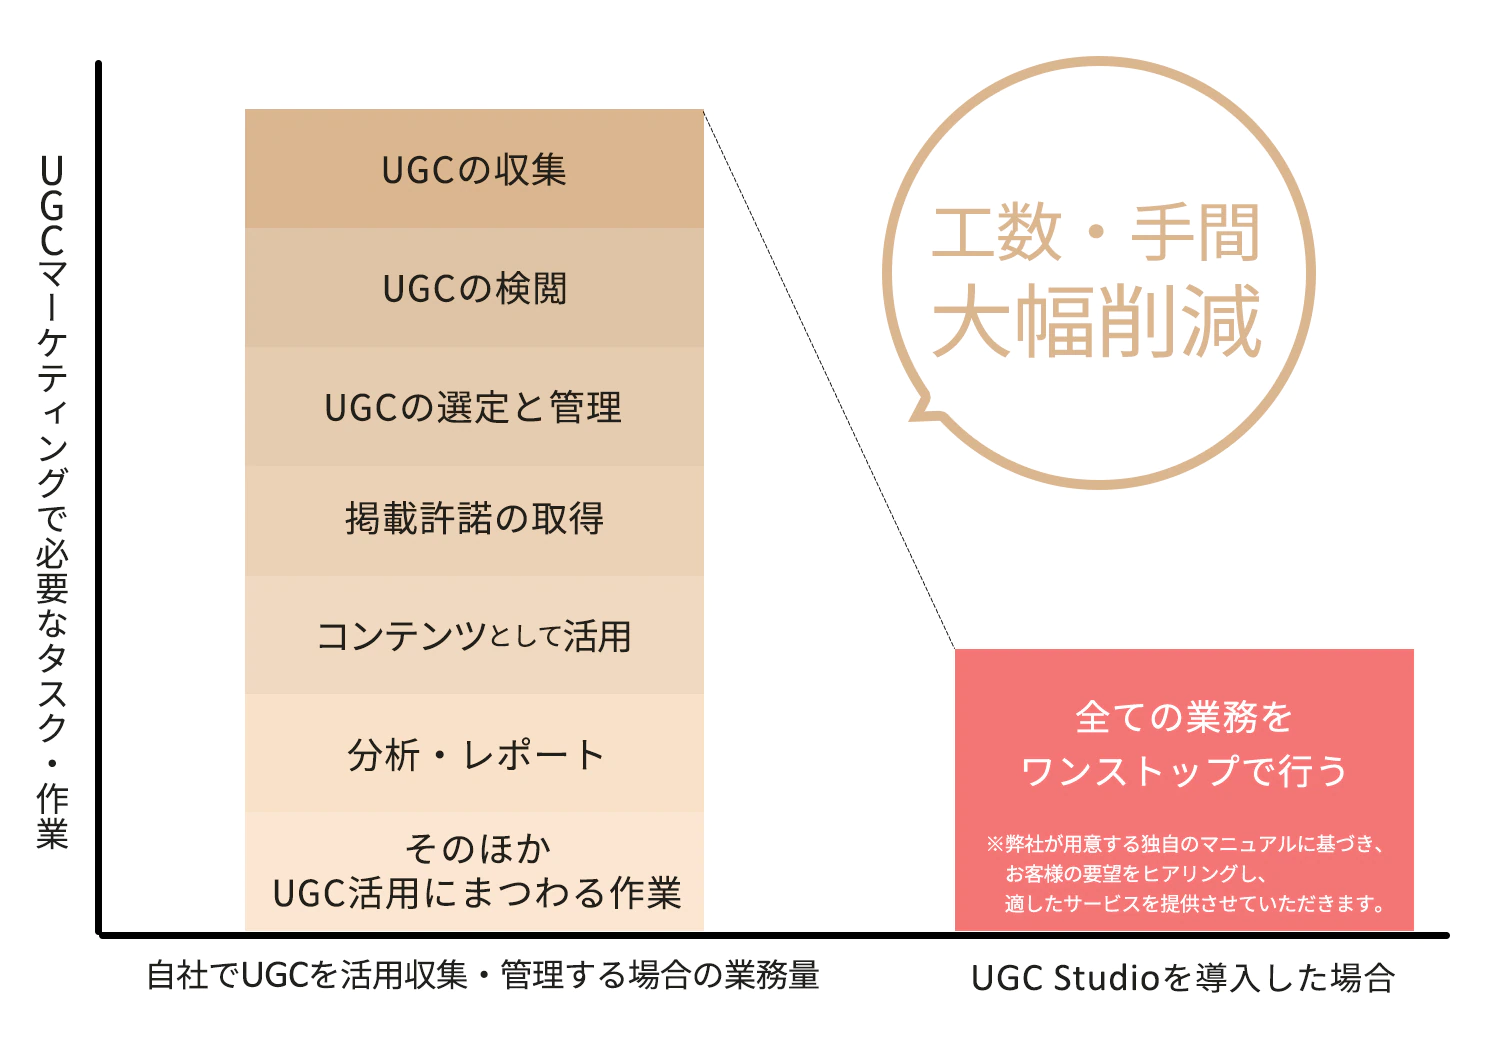 UGC Studioを導入し、UGC活用コストが大幅改善